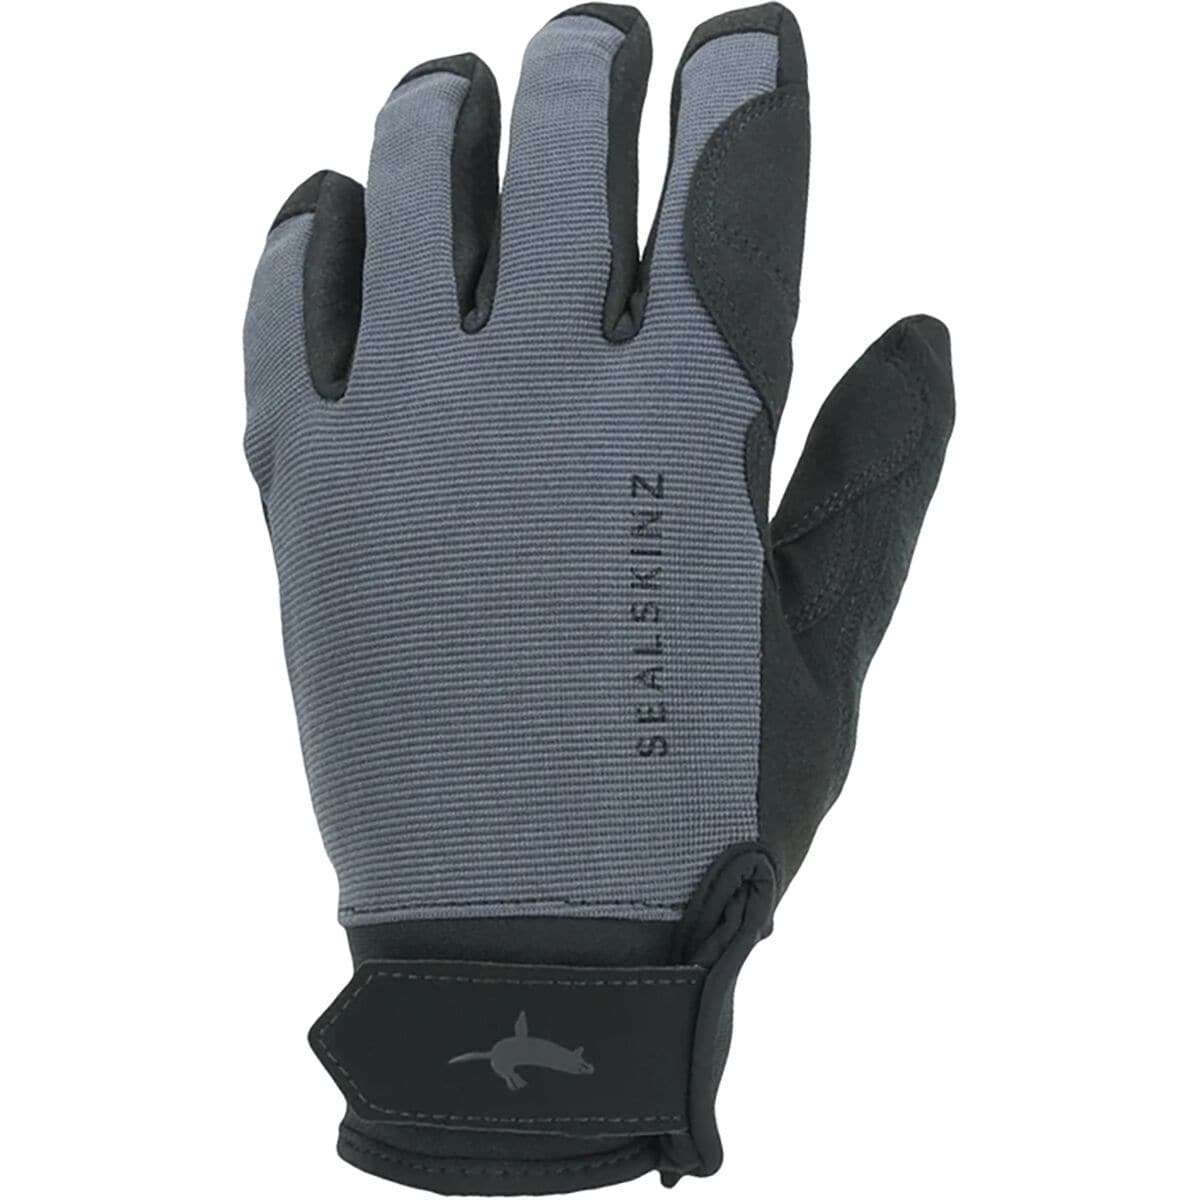 SealSkinz Sutton Waterproof All Weather MTB Glove - Men's Black/Grey, L